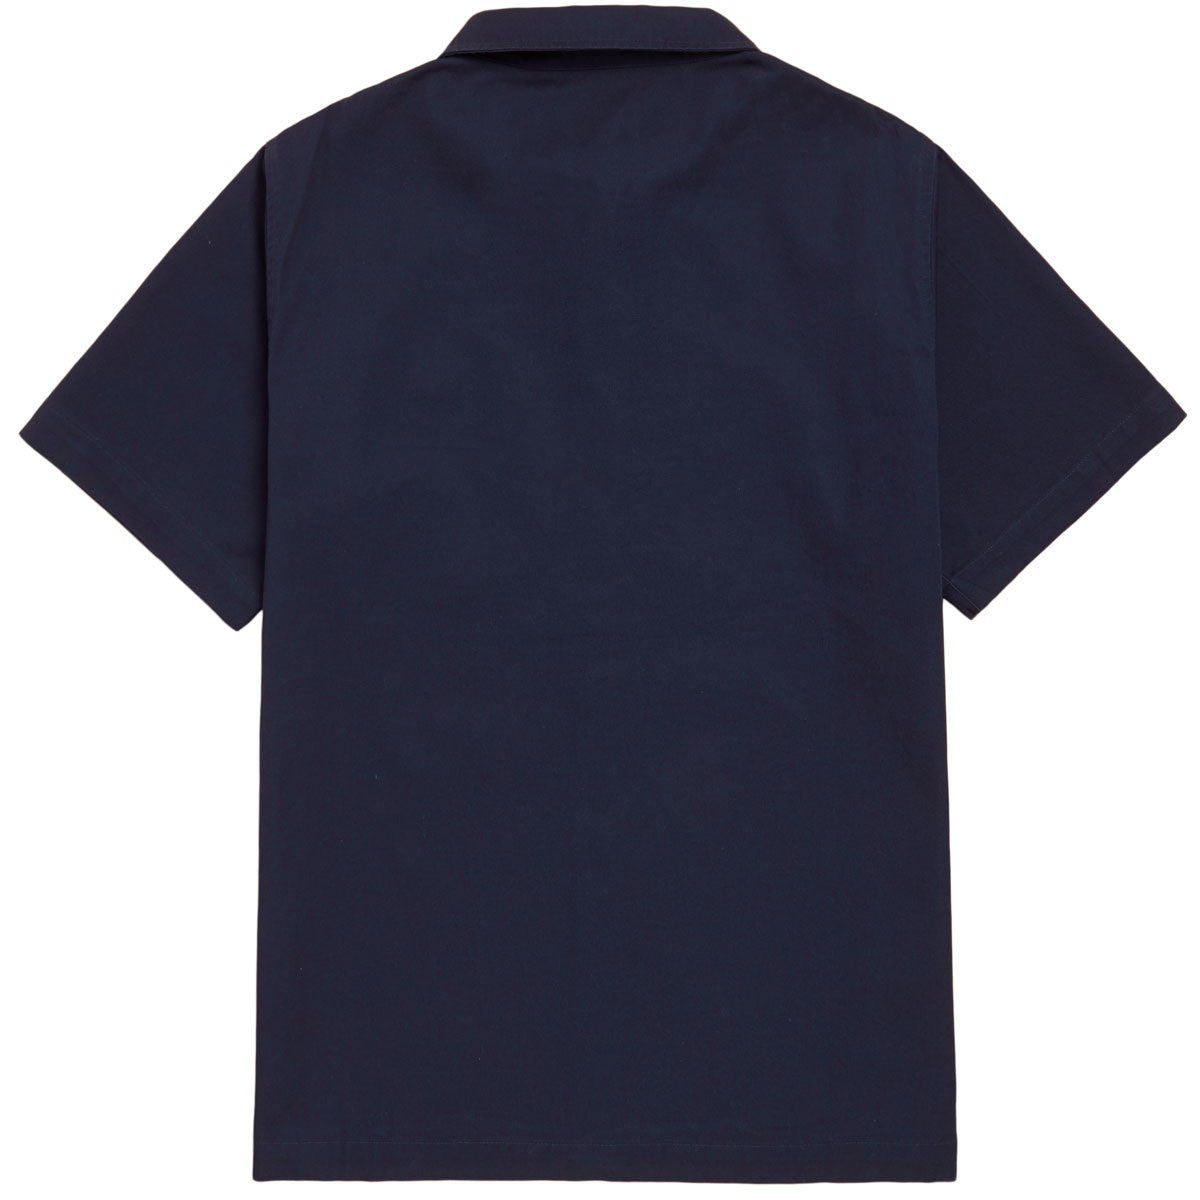 CCS Custom Embroidered Work Shirt - Navy image 3